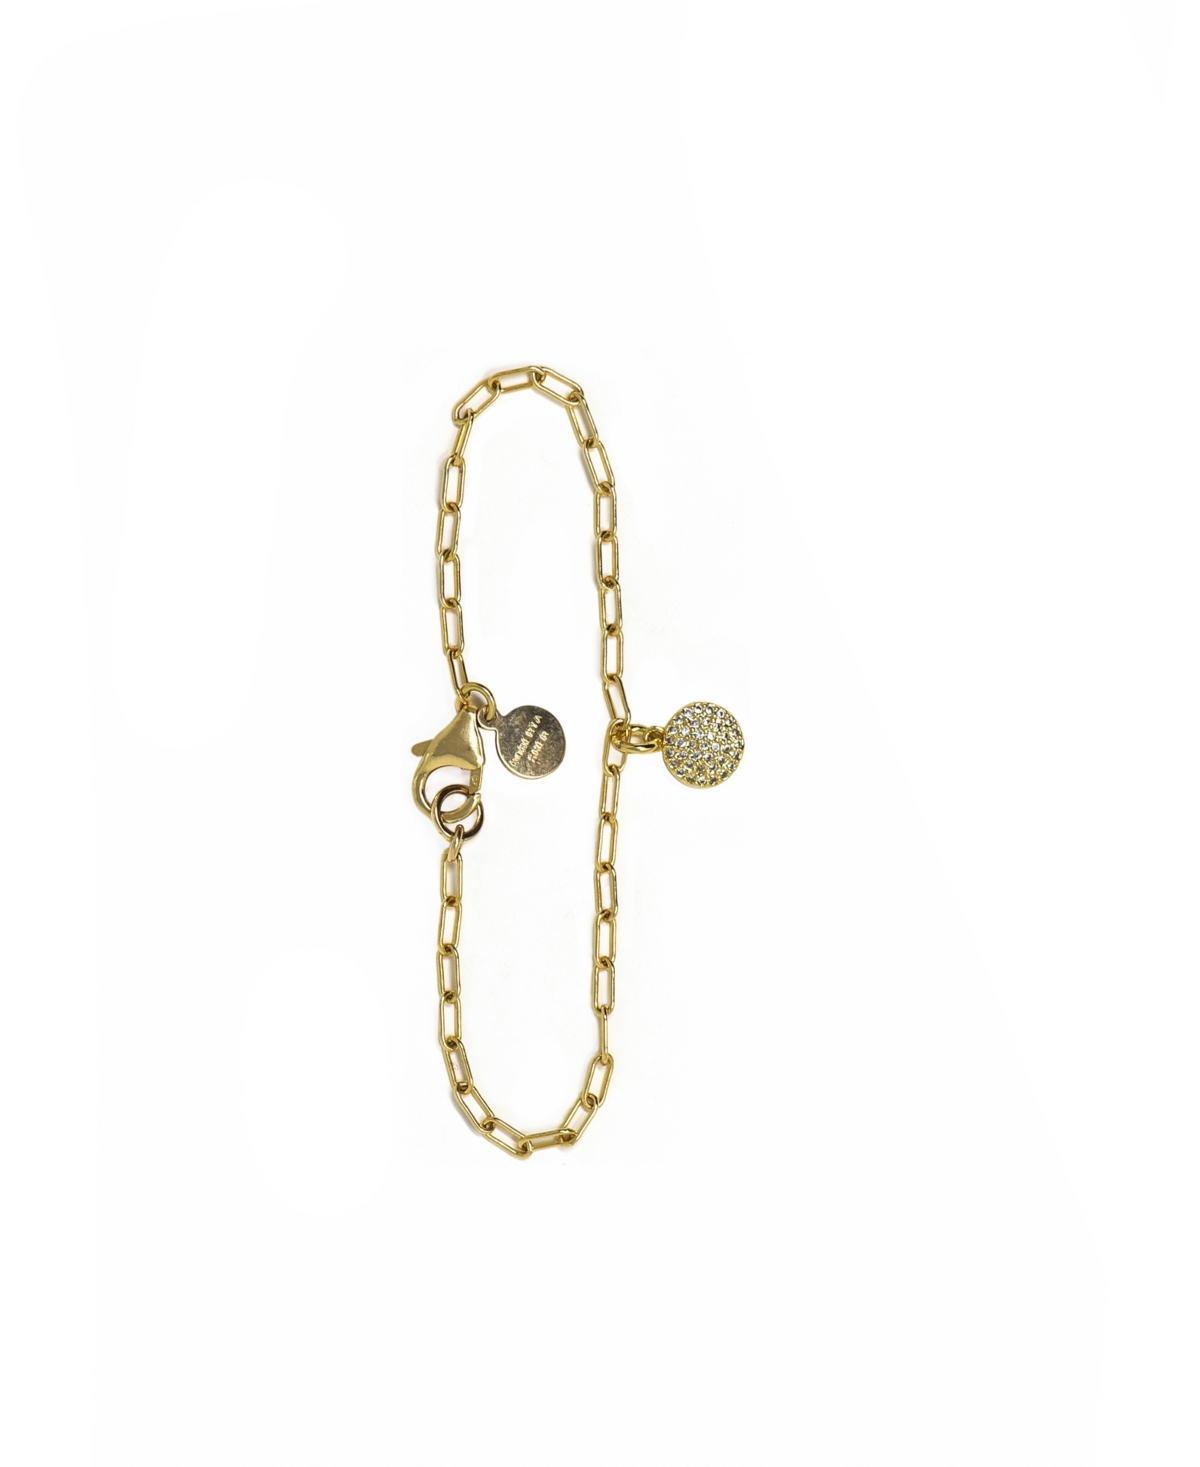 14k Gold Filled Single Strand Bracelet with Pave Disk Charm - Clear